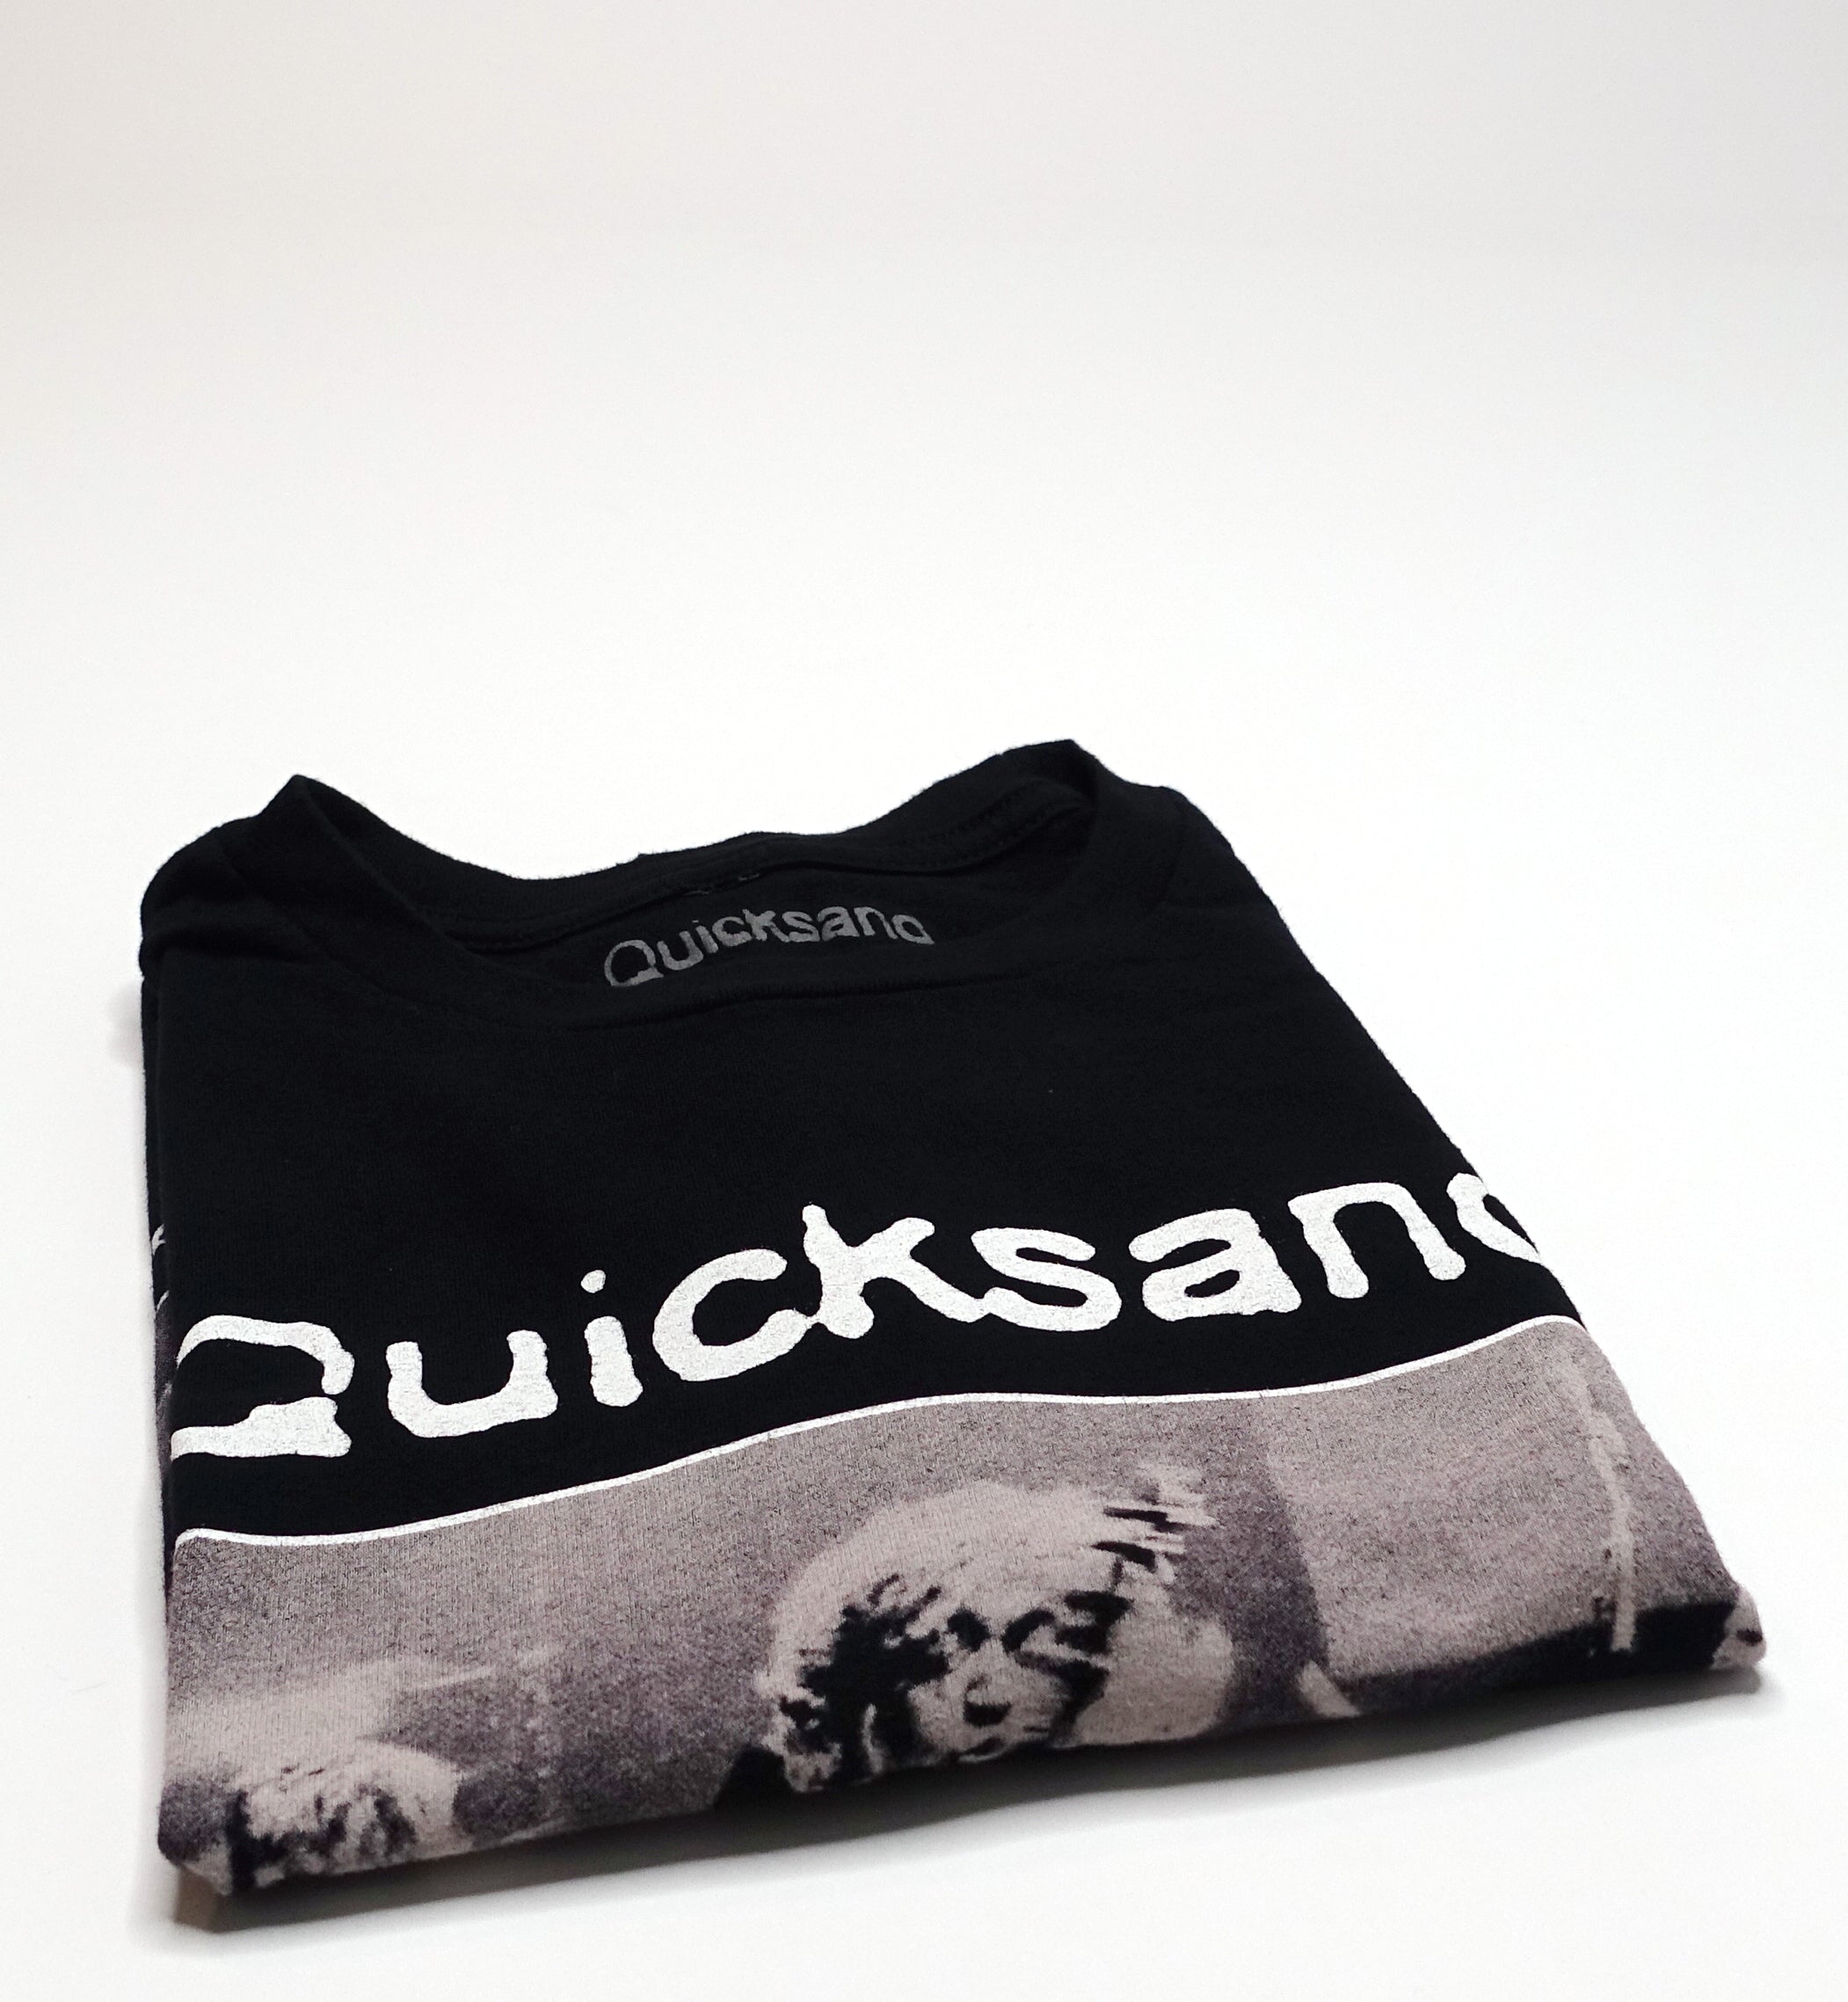 Quicksand ‎–  NYC 2018 Interiors Tour Shirt Size Small